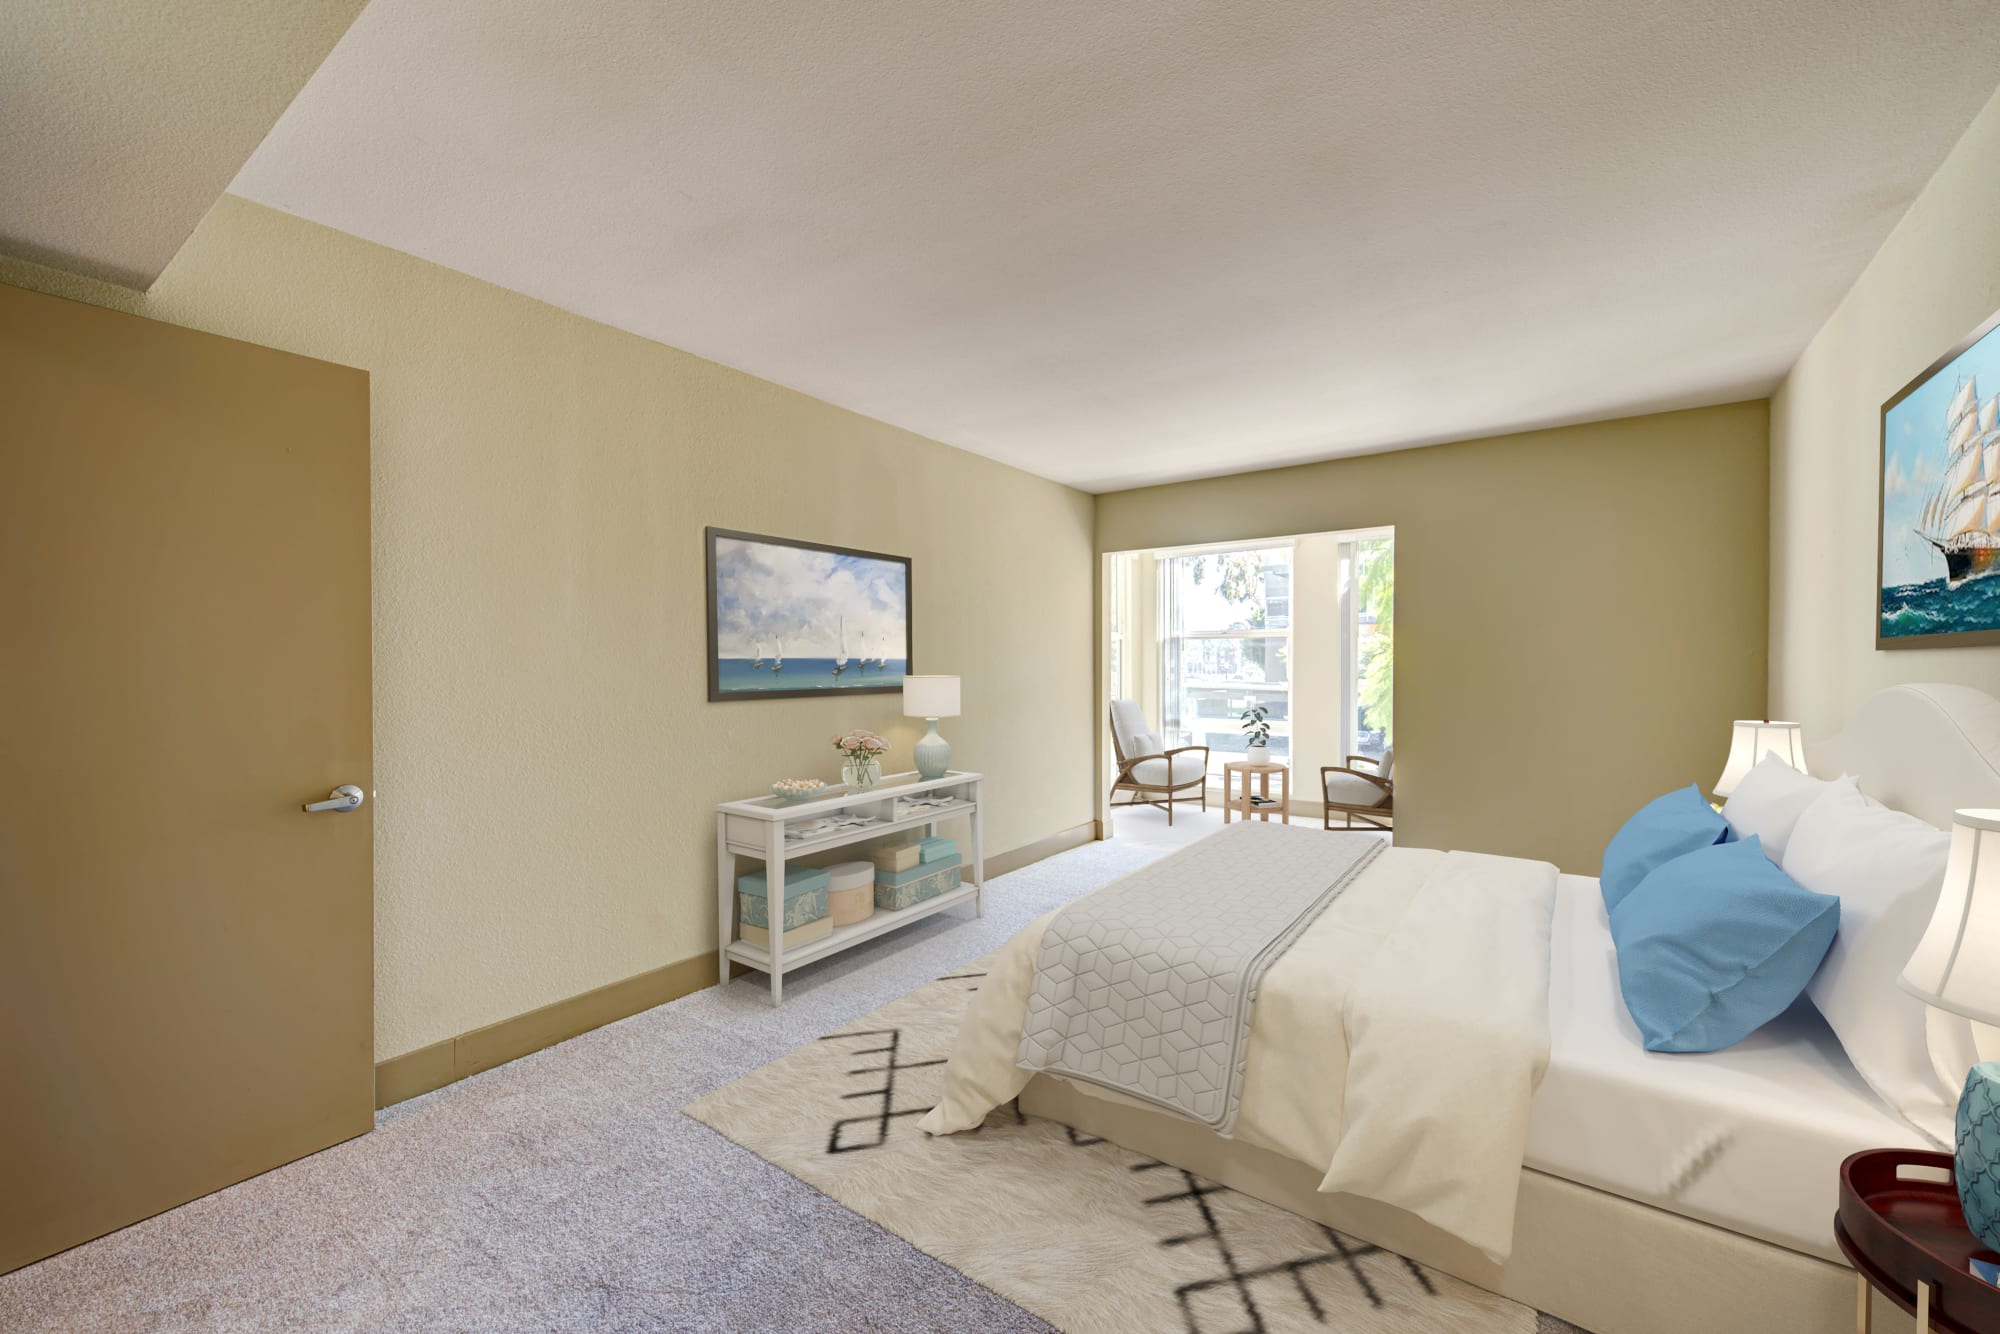 A spacious bedroom and sunroom at Harborside Marina Bay Apartments in Marina del Rey, California